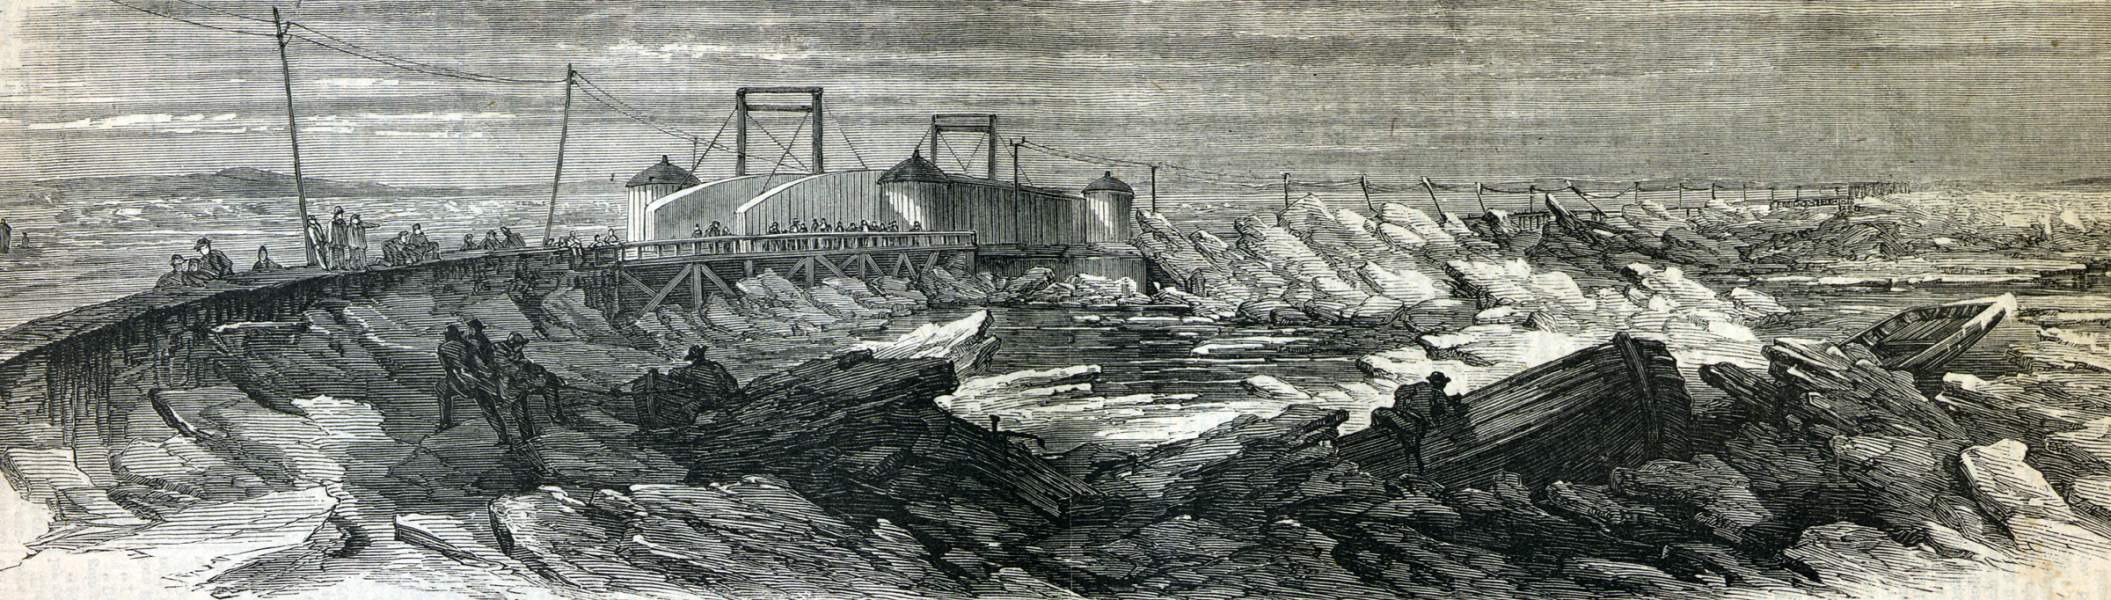 Ice Dam at the Long Bridge, Washington, D.C., February 6, 1867, artist's impression, zoomable image.